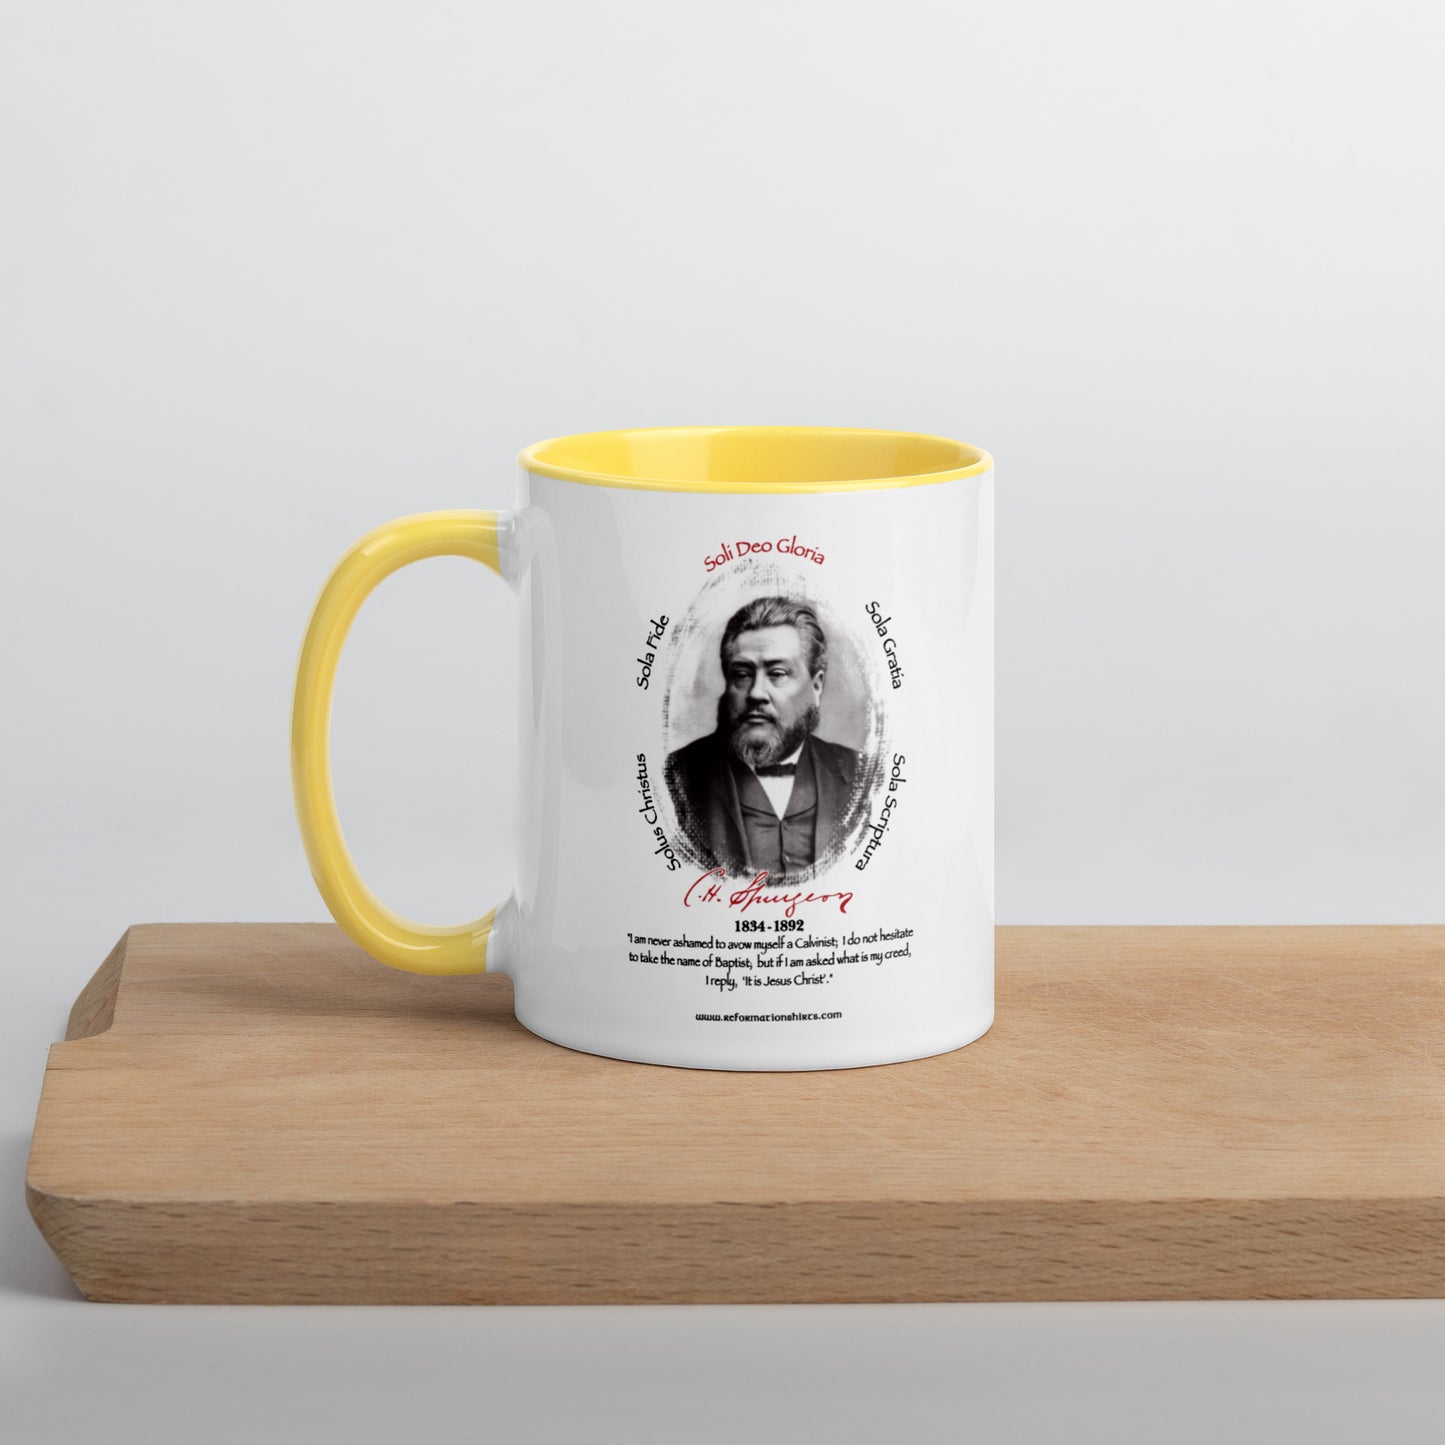 Charles Spurgeon Baptist Preacher and Theologian Mug